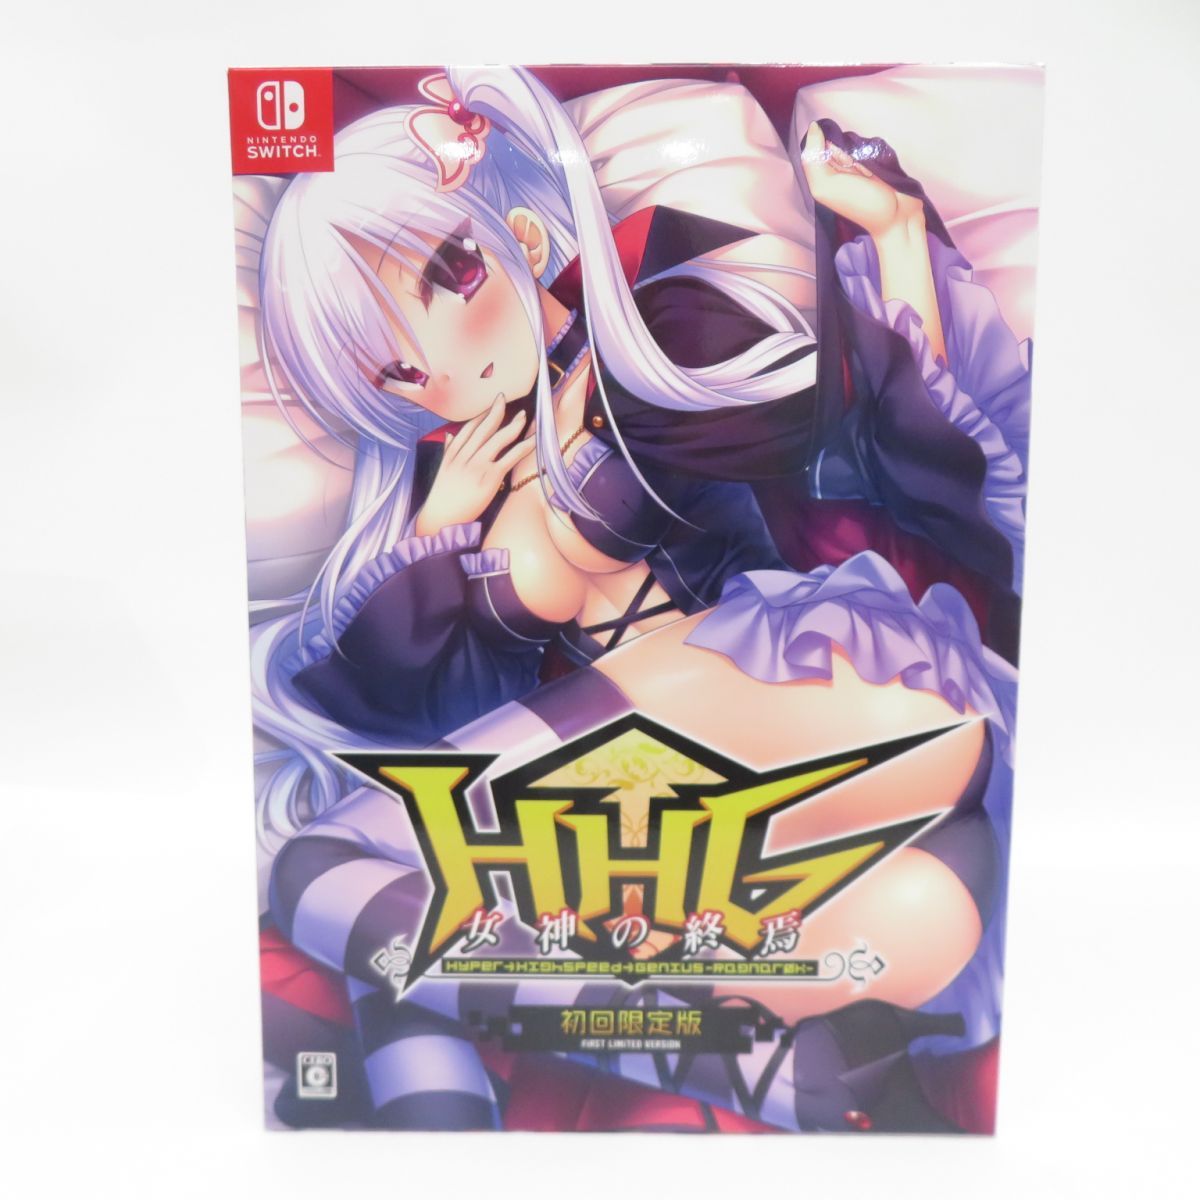 Nintendo Switchソフト HHG 女神の終焉 初回限定版 ソフト未開封 